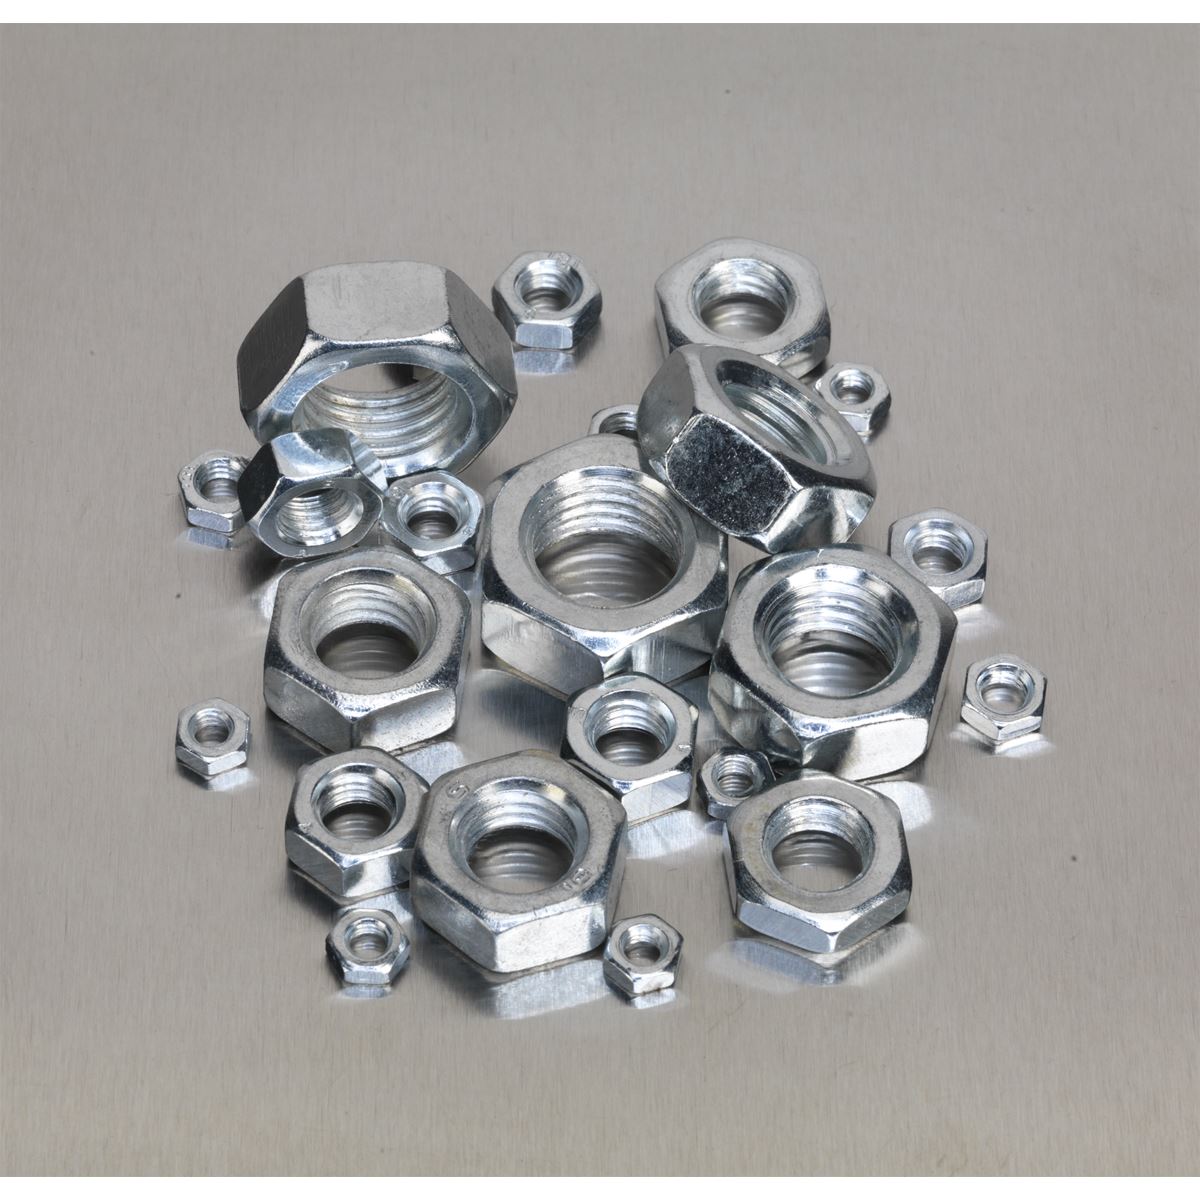 Sealey Steel Nut Assortment 255pc M4-M16 Metric